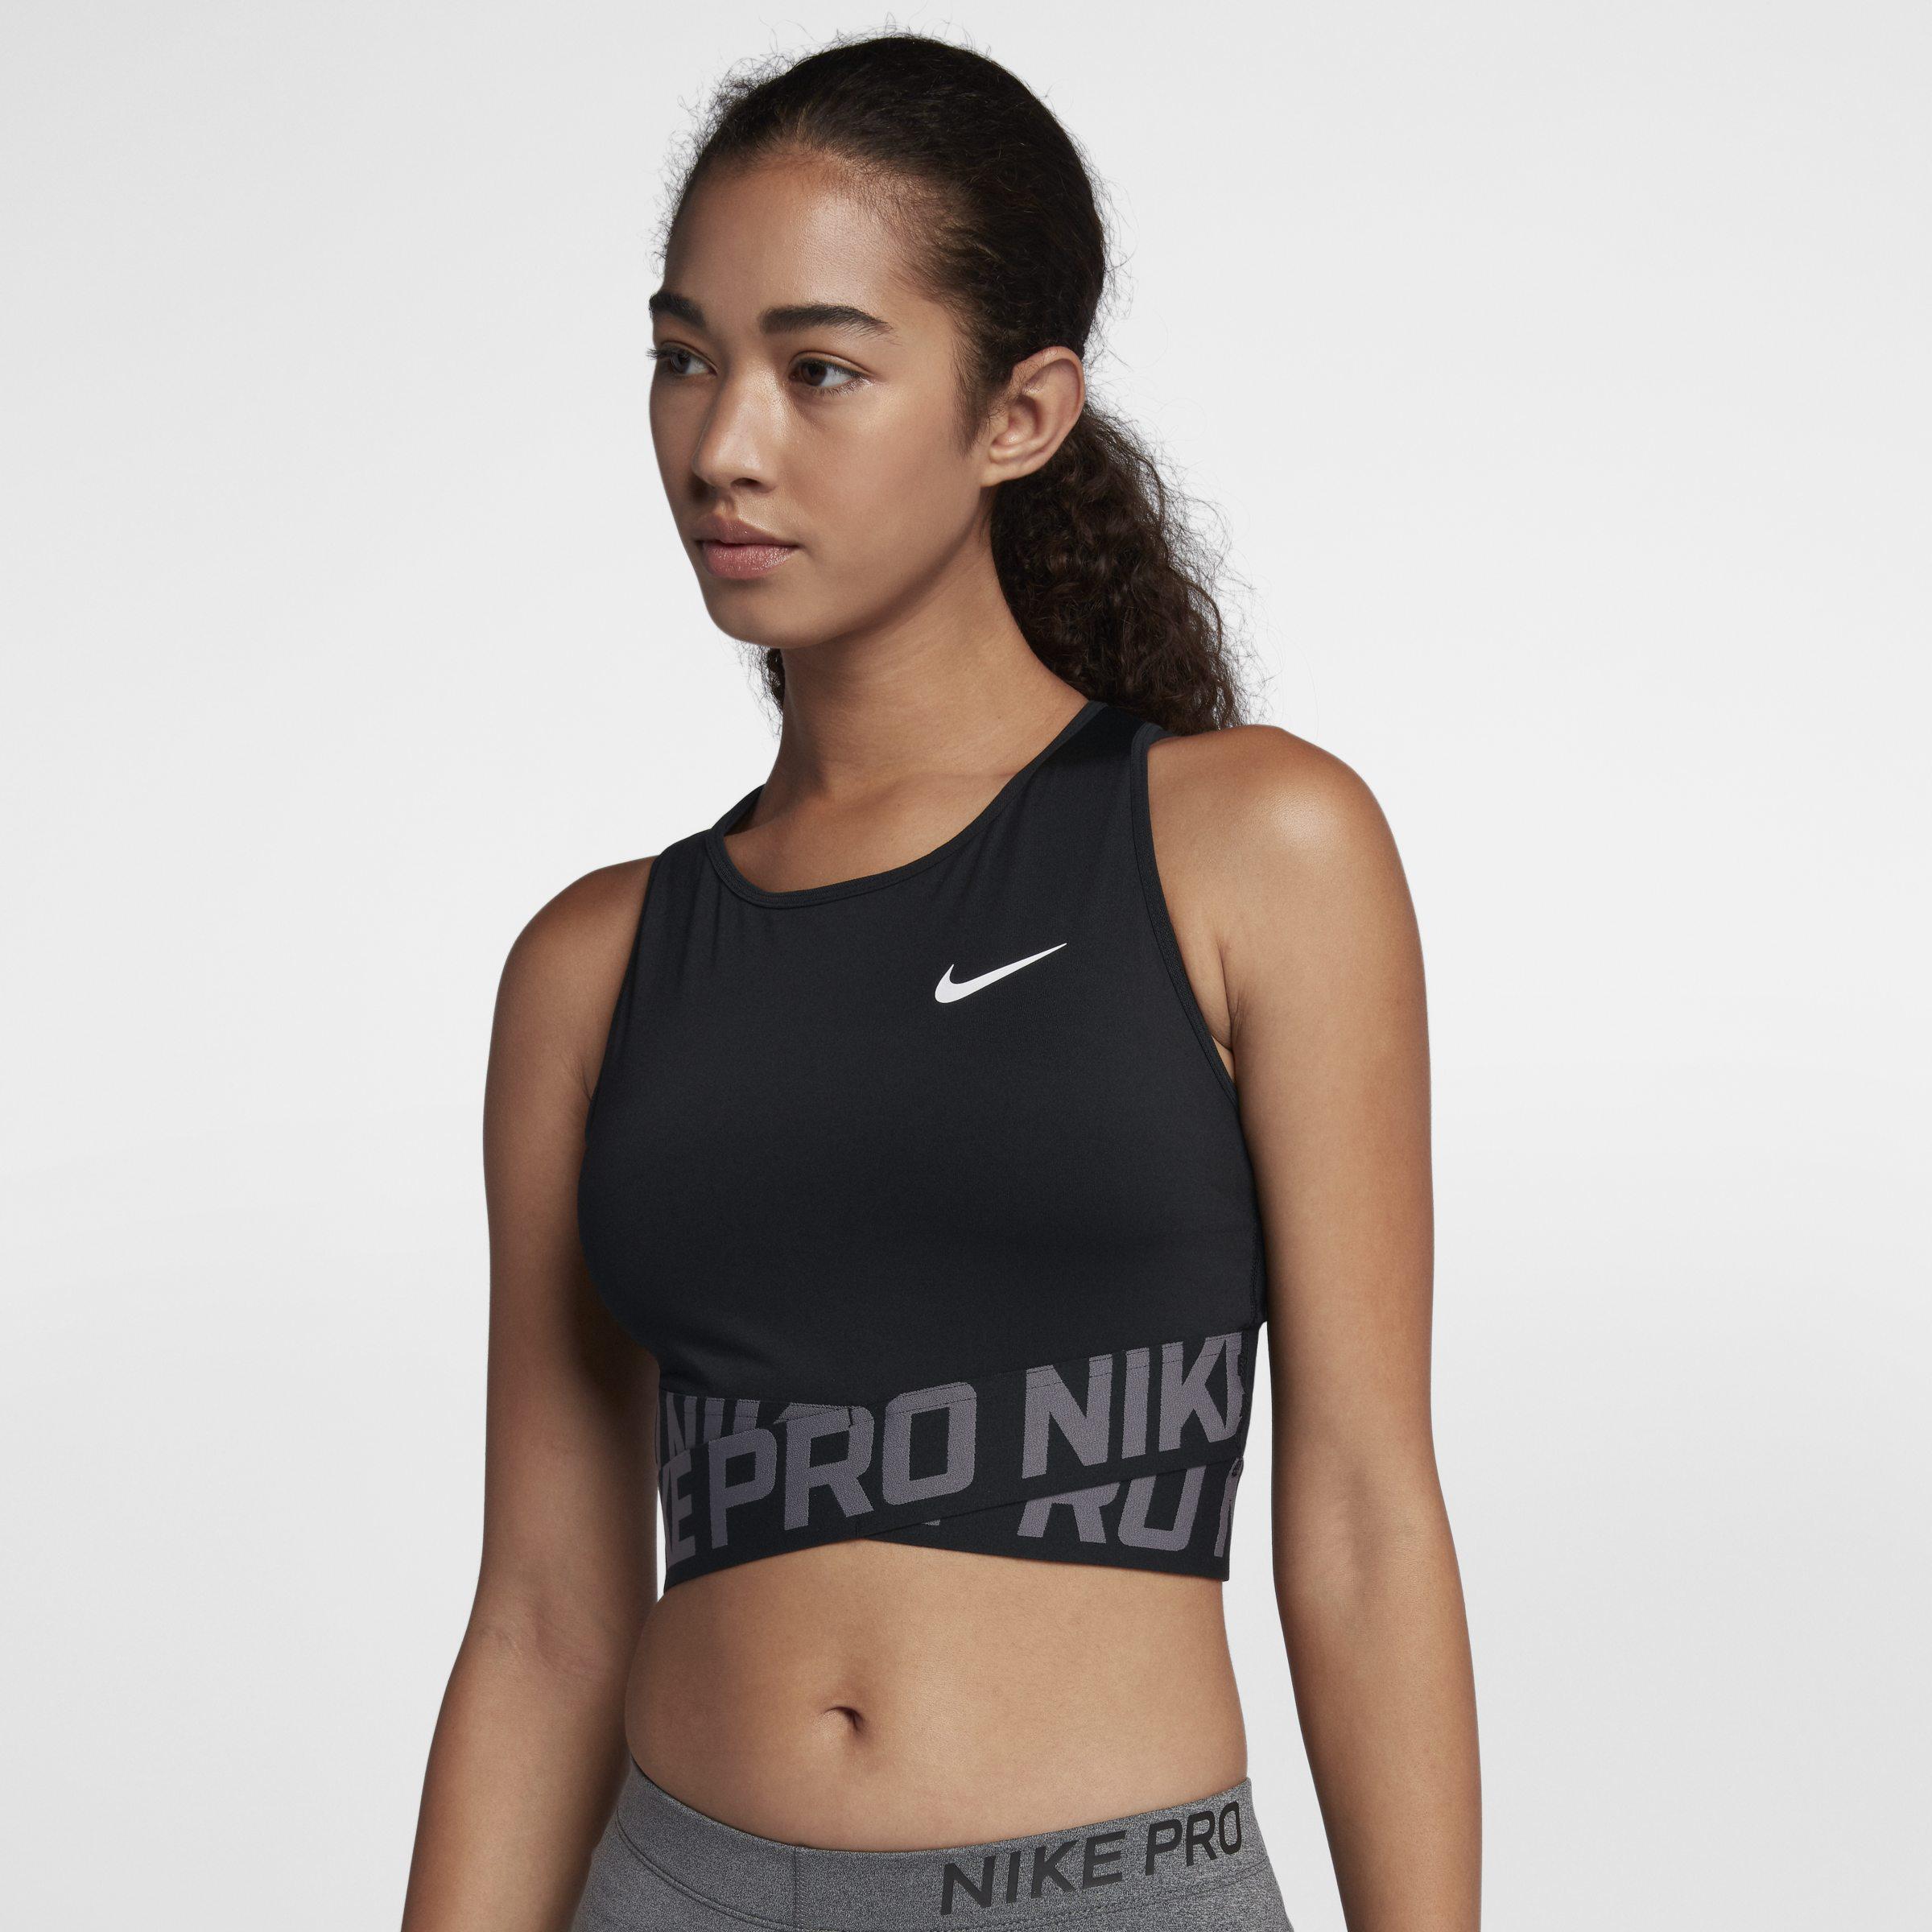 Найк женщины. Nike Pro Intertwist майка. Womens femme Nike топ. Nike Nike Pro. Майка Nike Pro Tank женская черная.